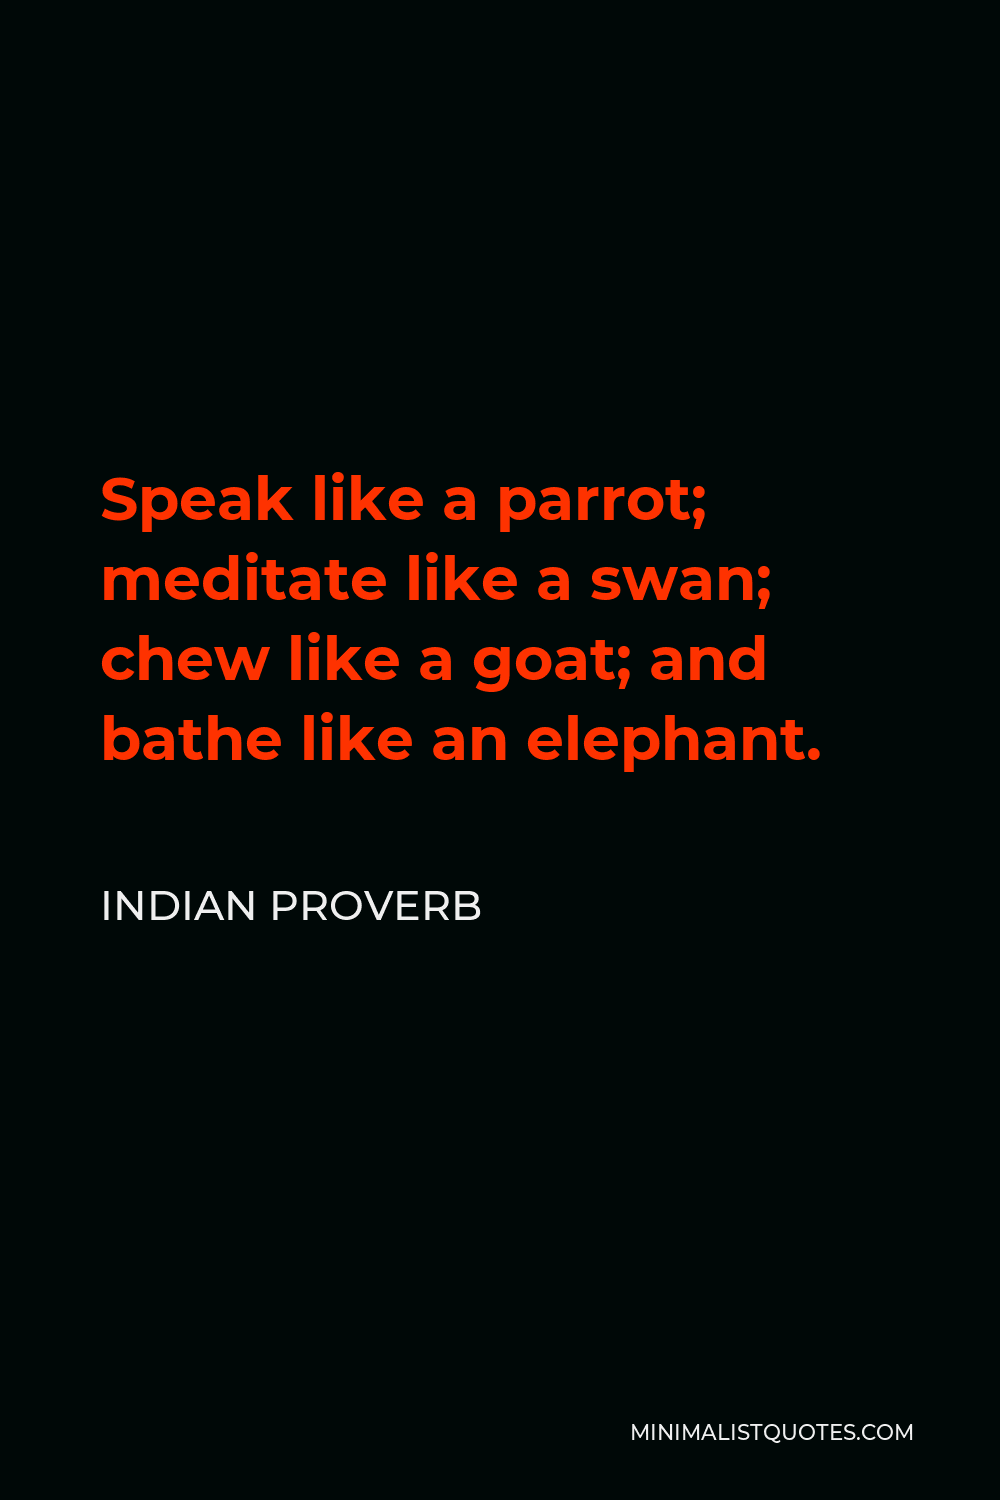 Indian Proverb Quote - Speak like a parrot; meditate like a swan; chew like a goat; and bathe like an elephant.